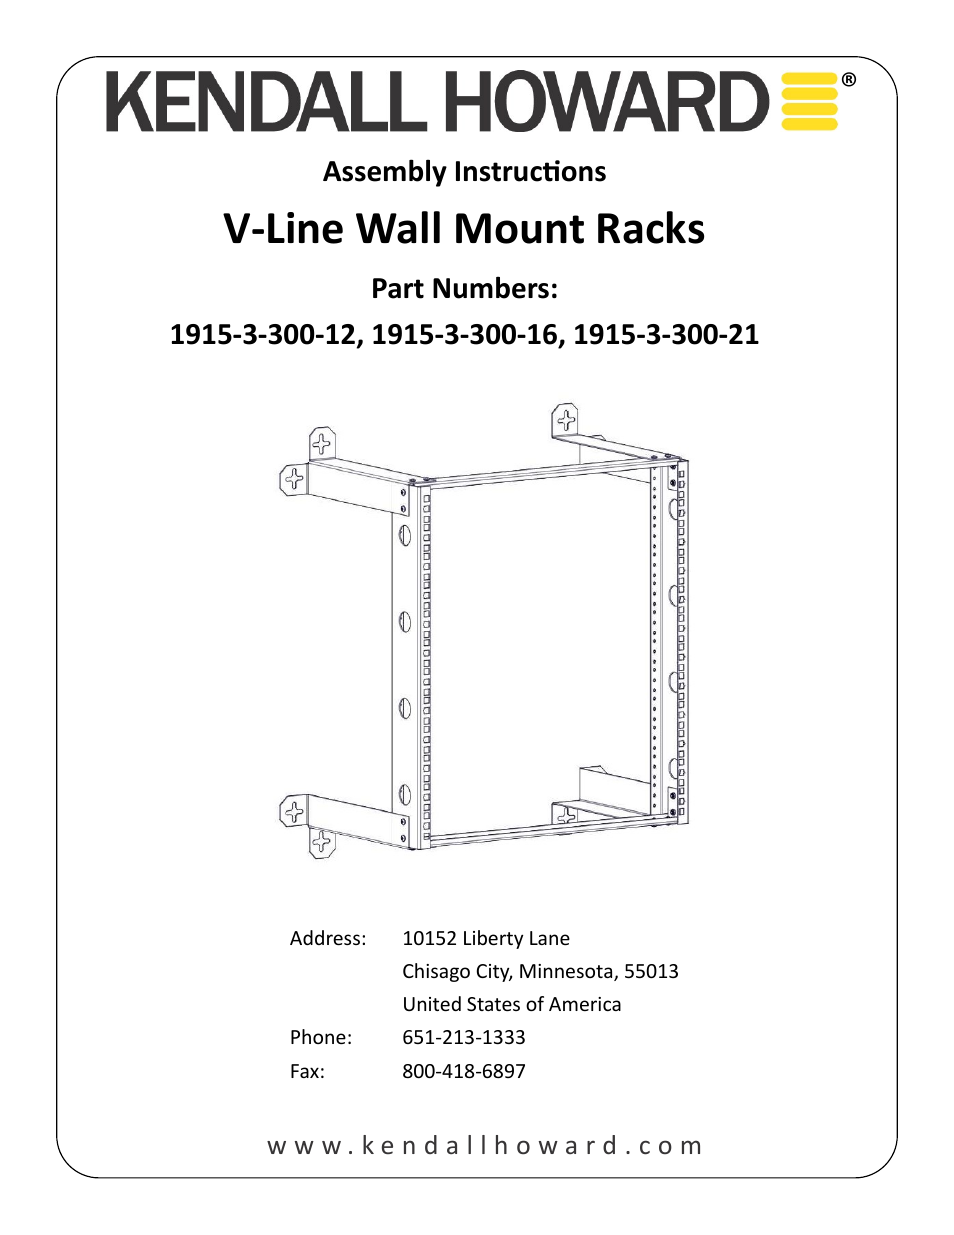 1915-3-300-12 12U V-Line Wall Mount Rack